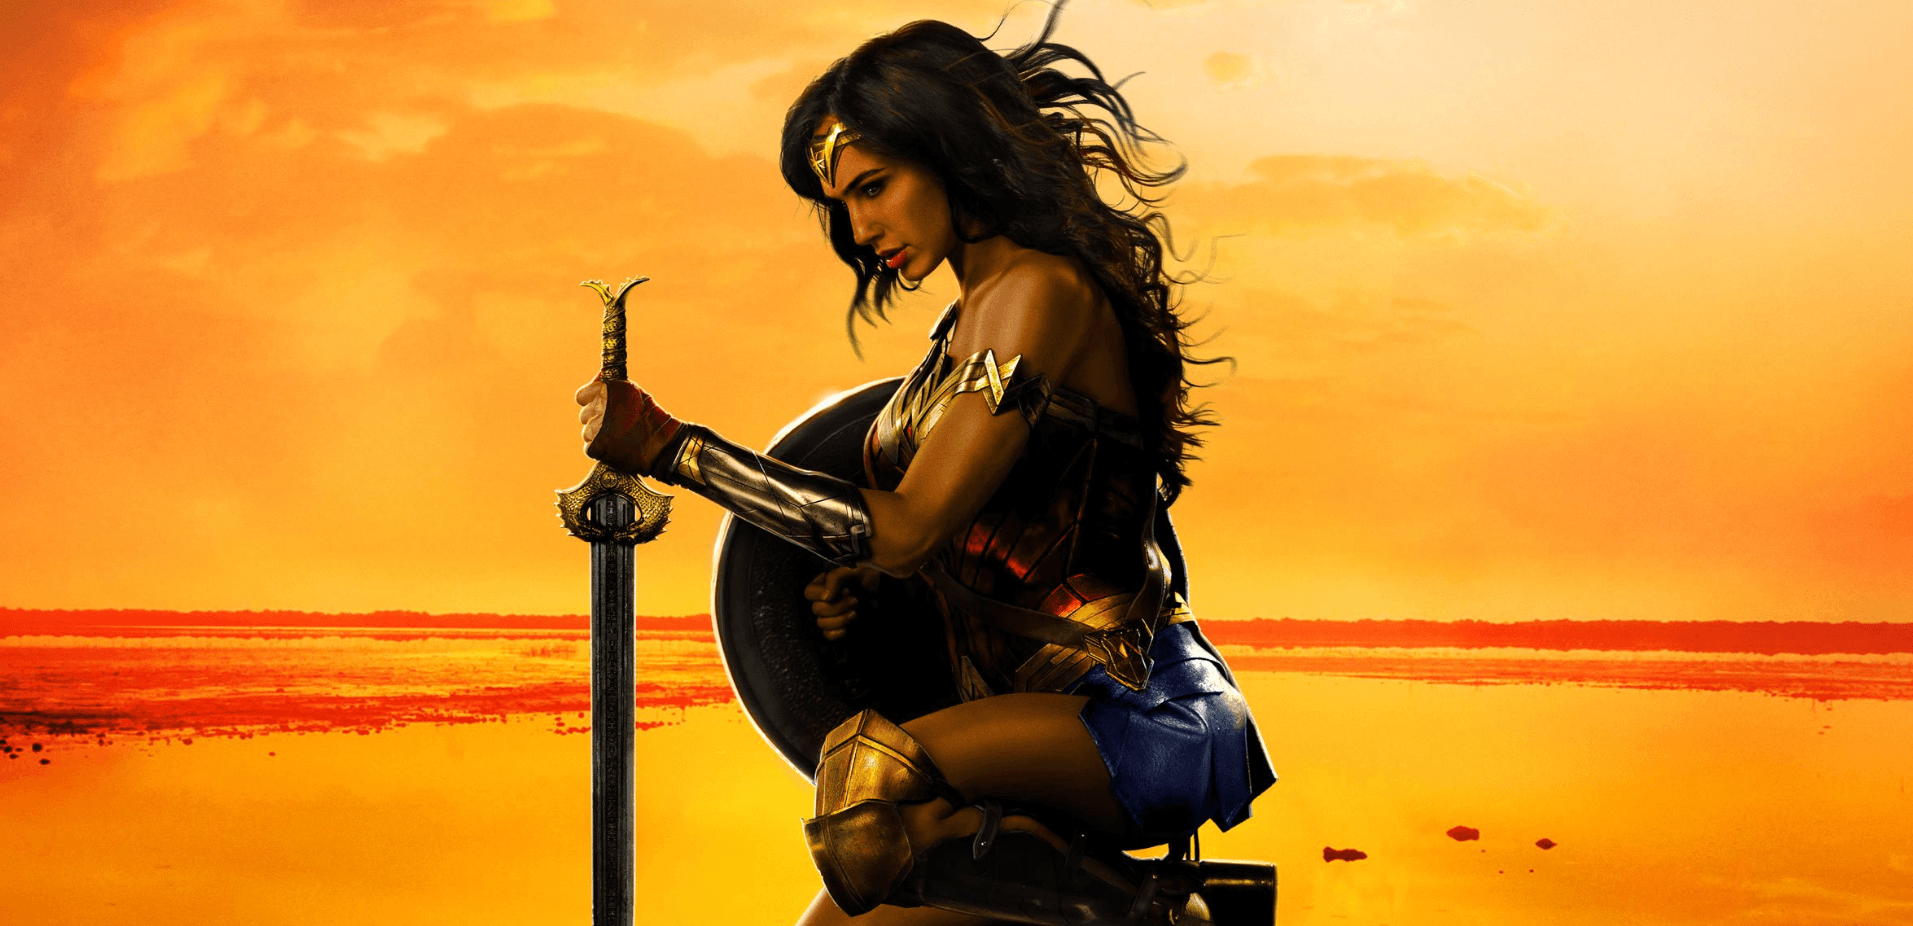 Wonder Woman Free Full Movie